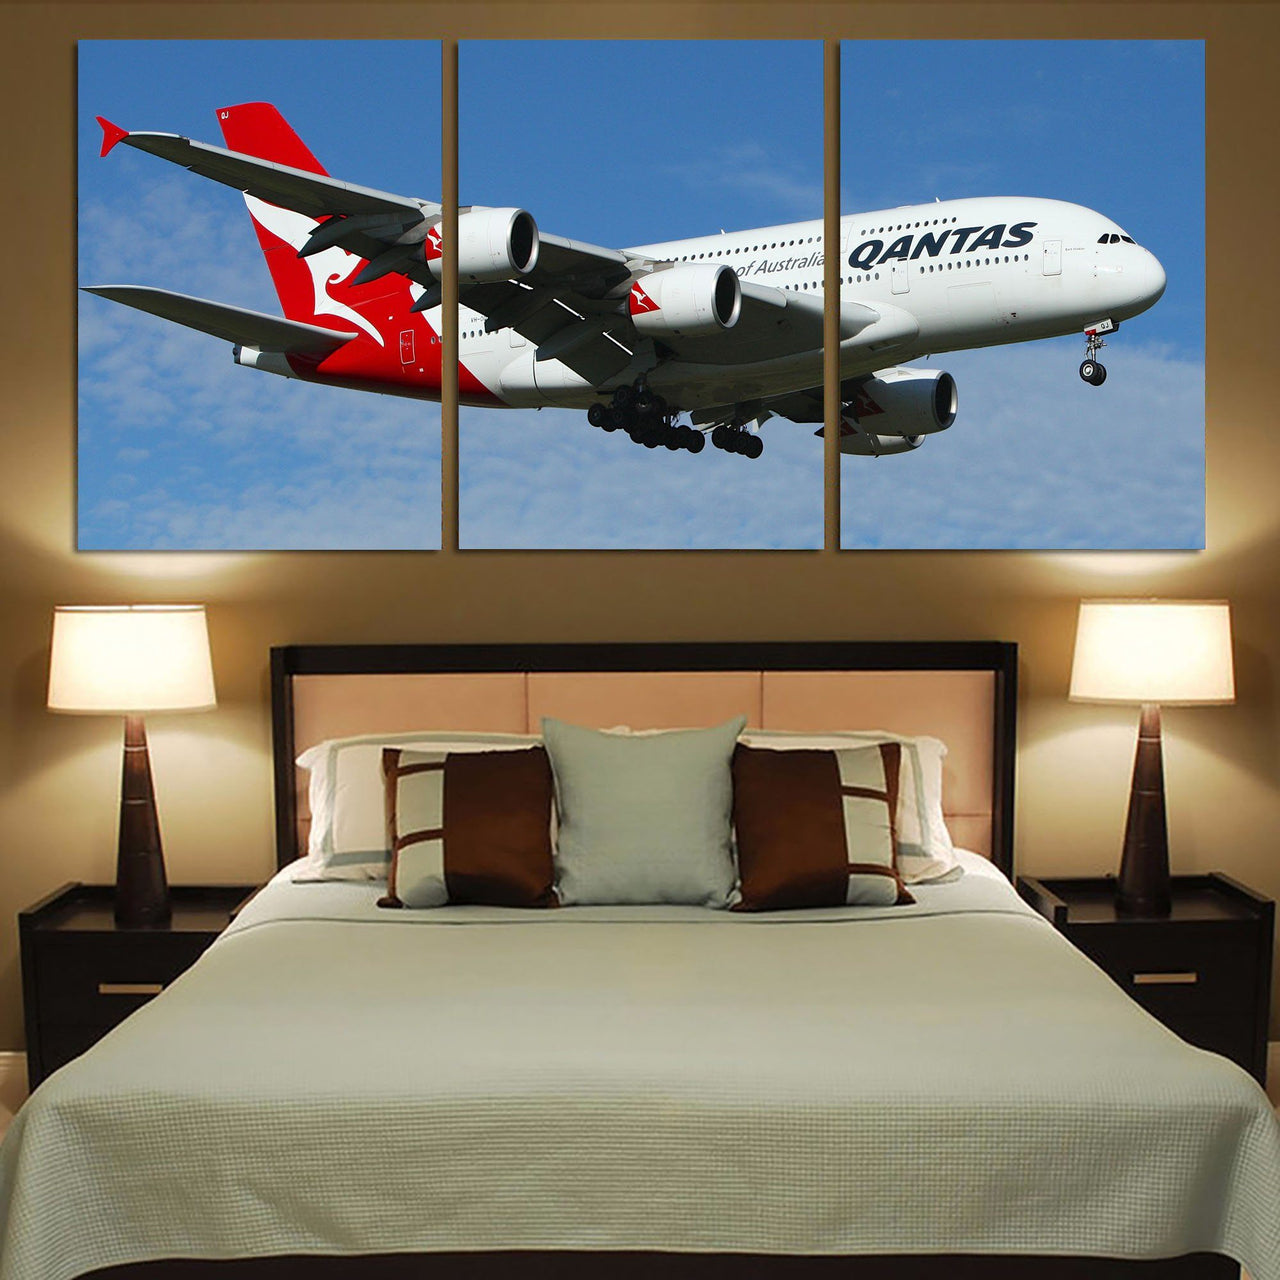 Landing Qantas A380 Printed Canvas Posters (3 Pieces) Aviation Shop 